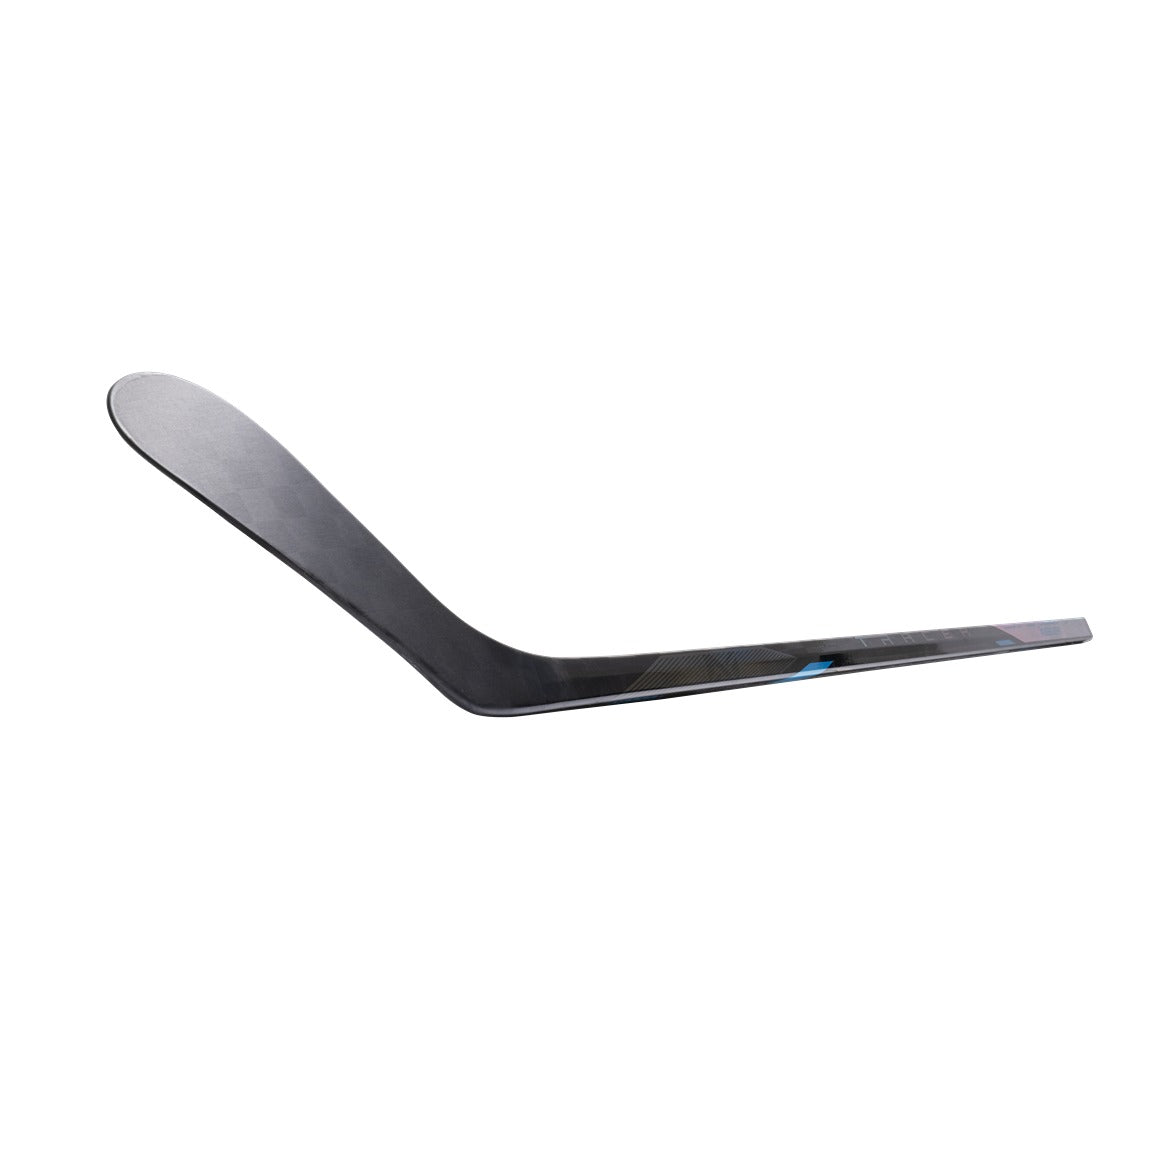 Bauer Nexus Tracer Hockey Stick - Youth